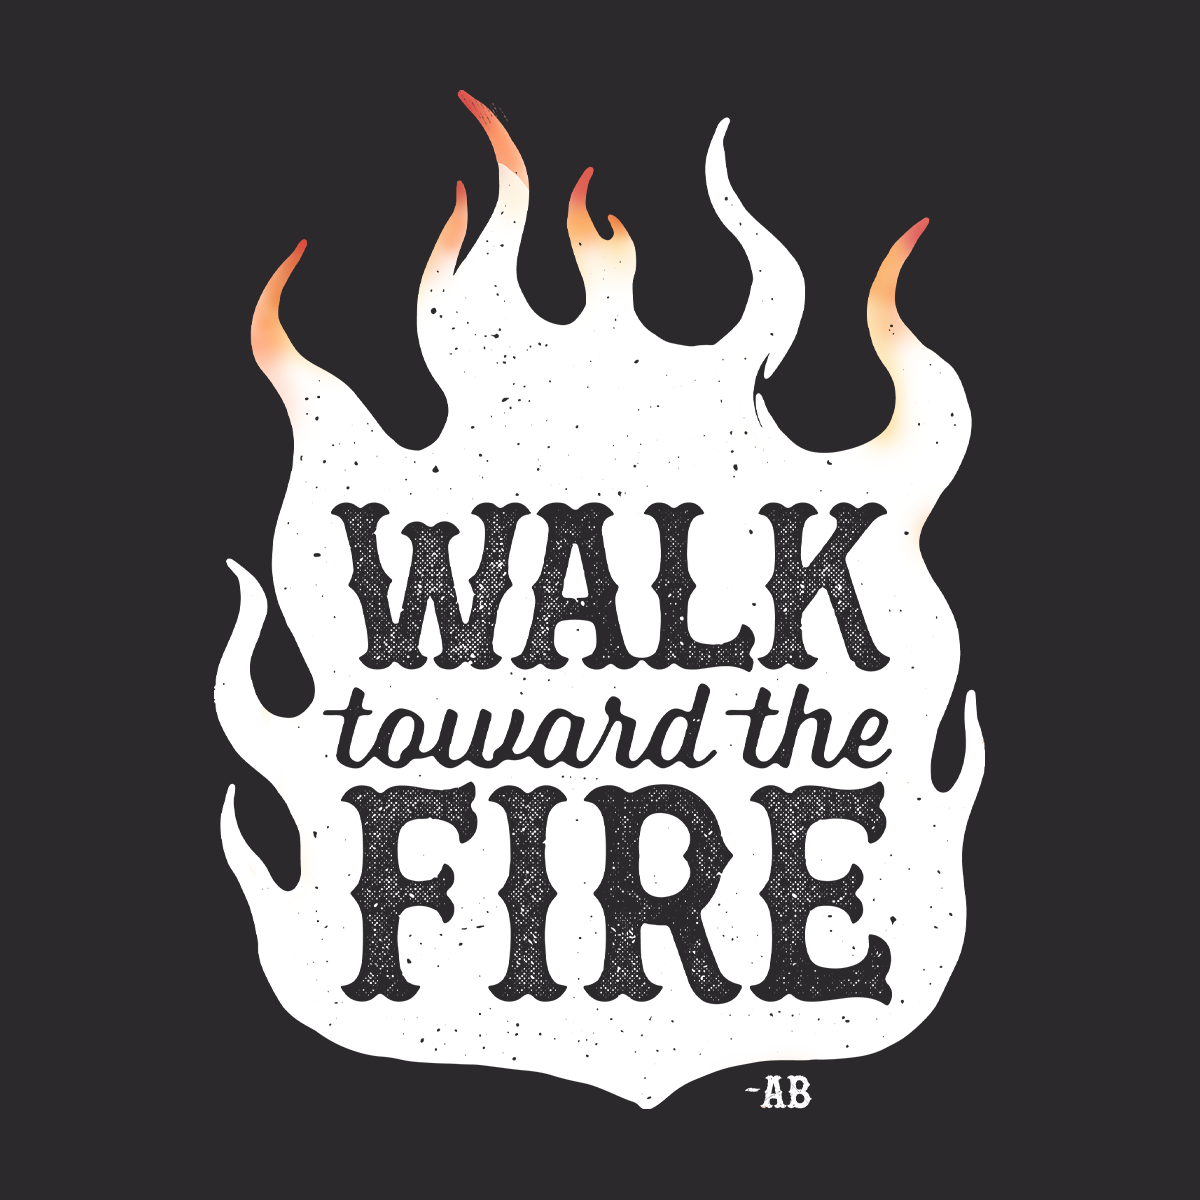 Walk Toward the Fire T-Shirt - Black